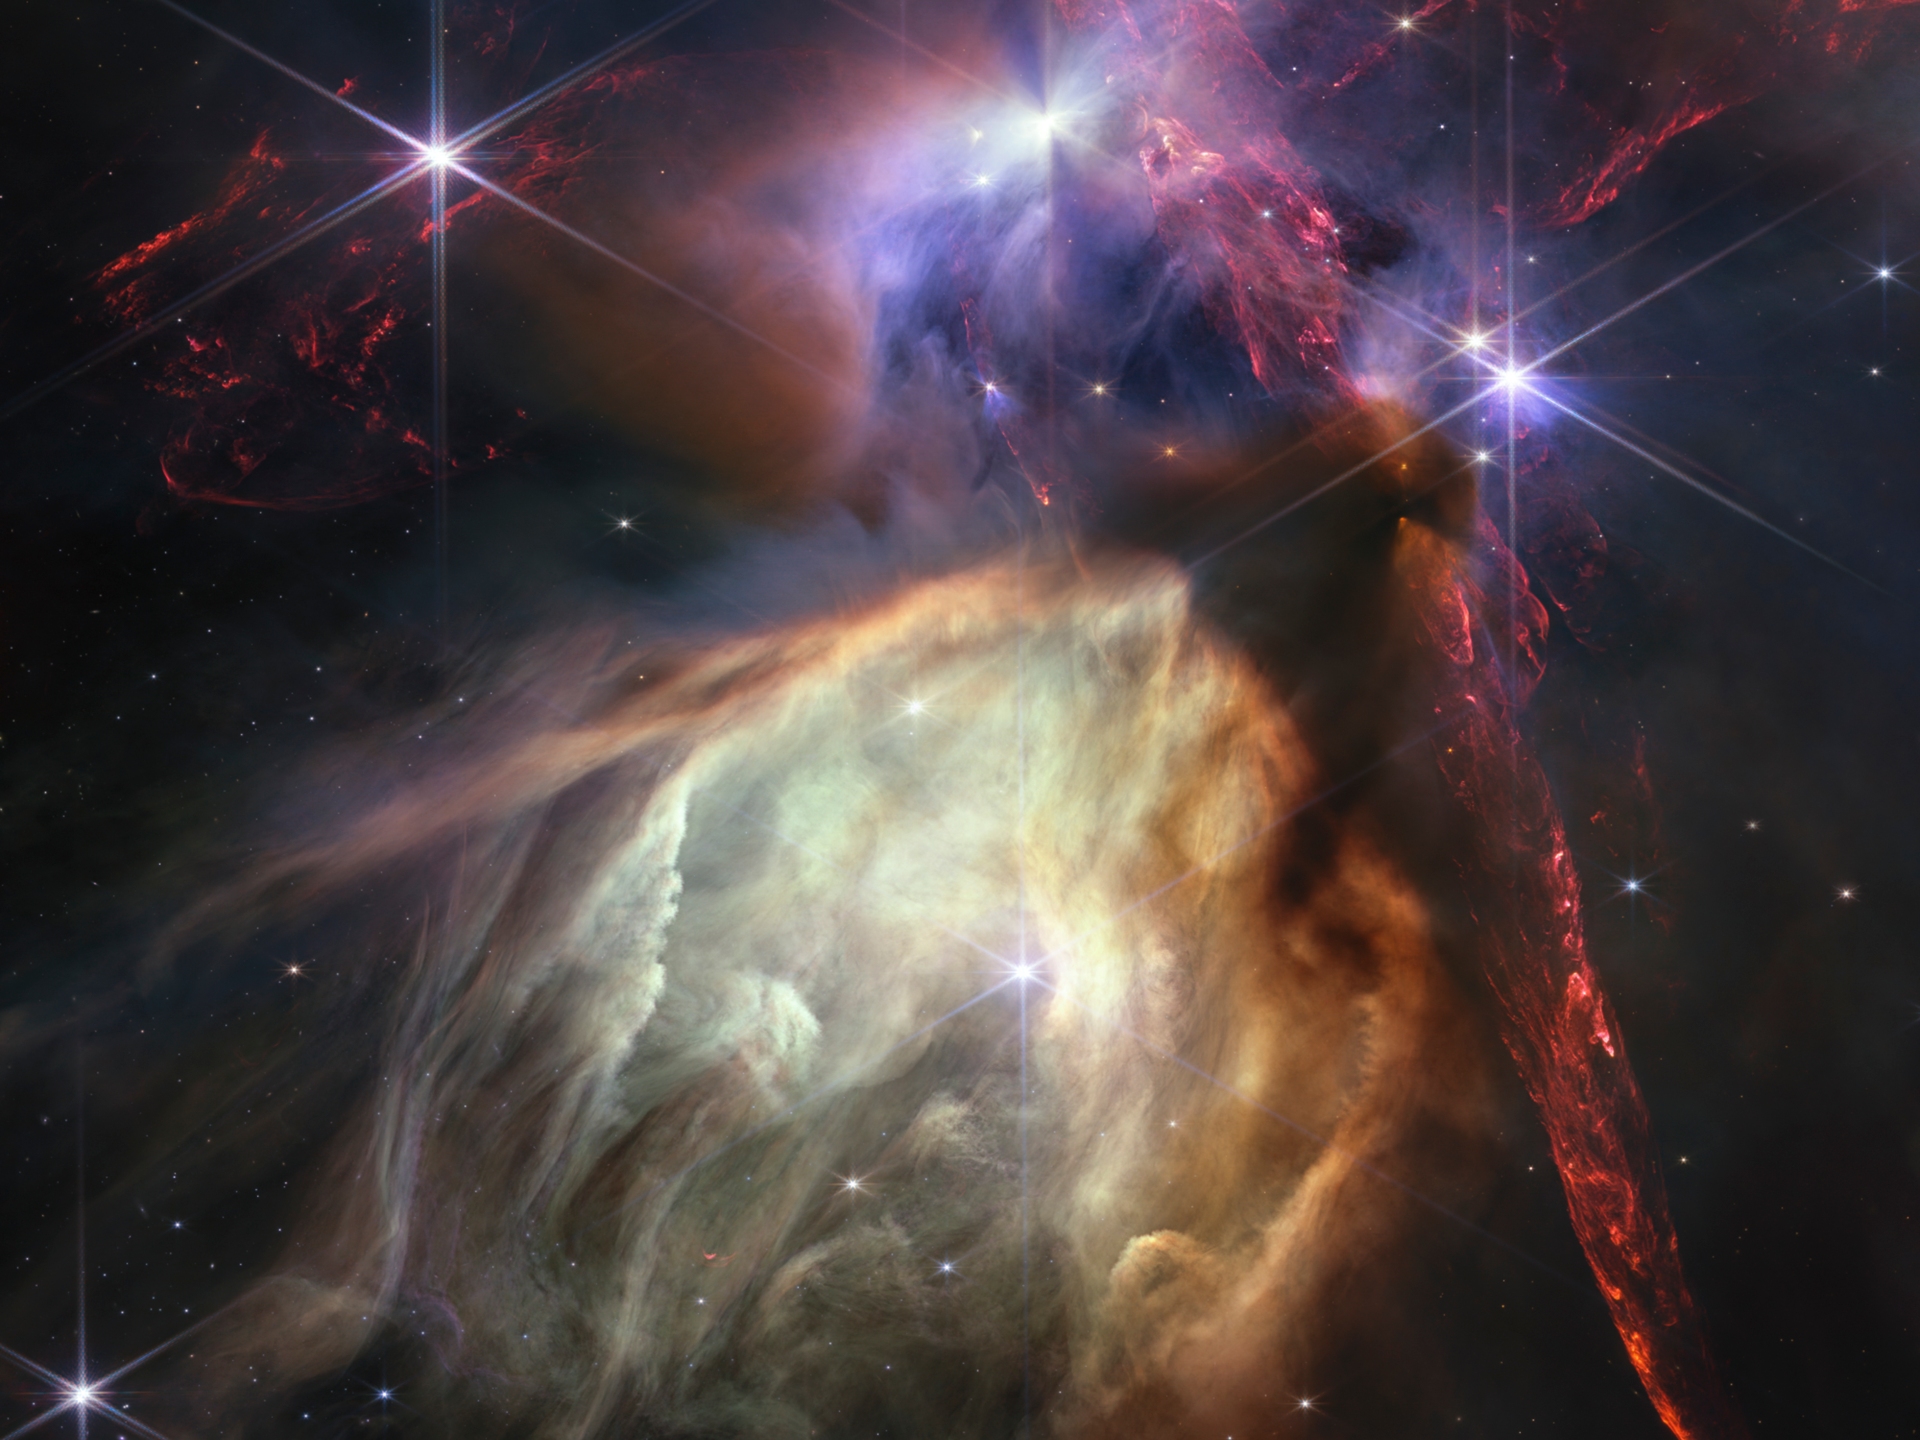 Stellar birth: Webb Space Telescope captures baby star close-up